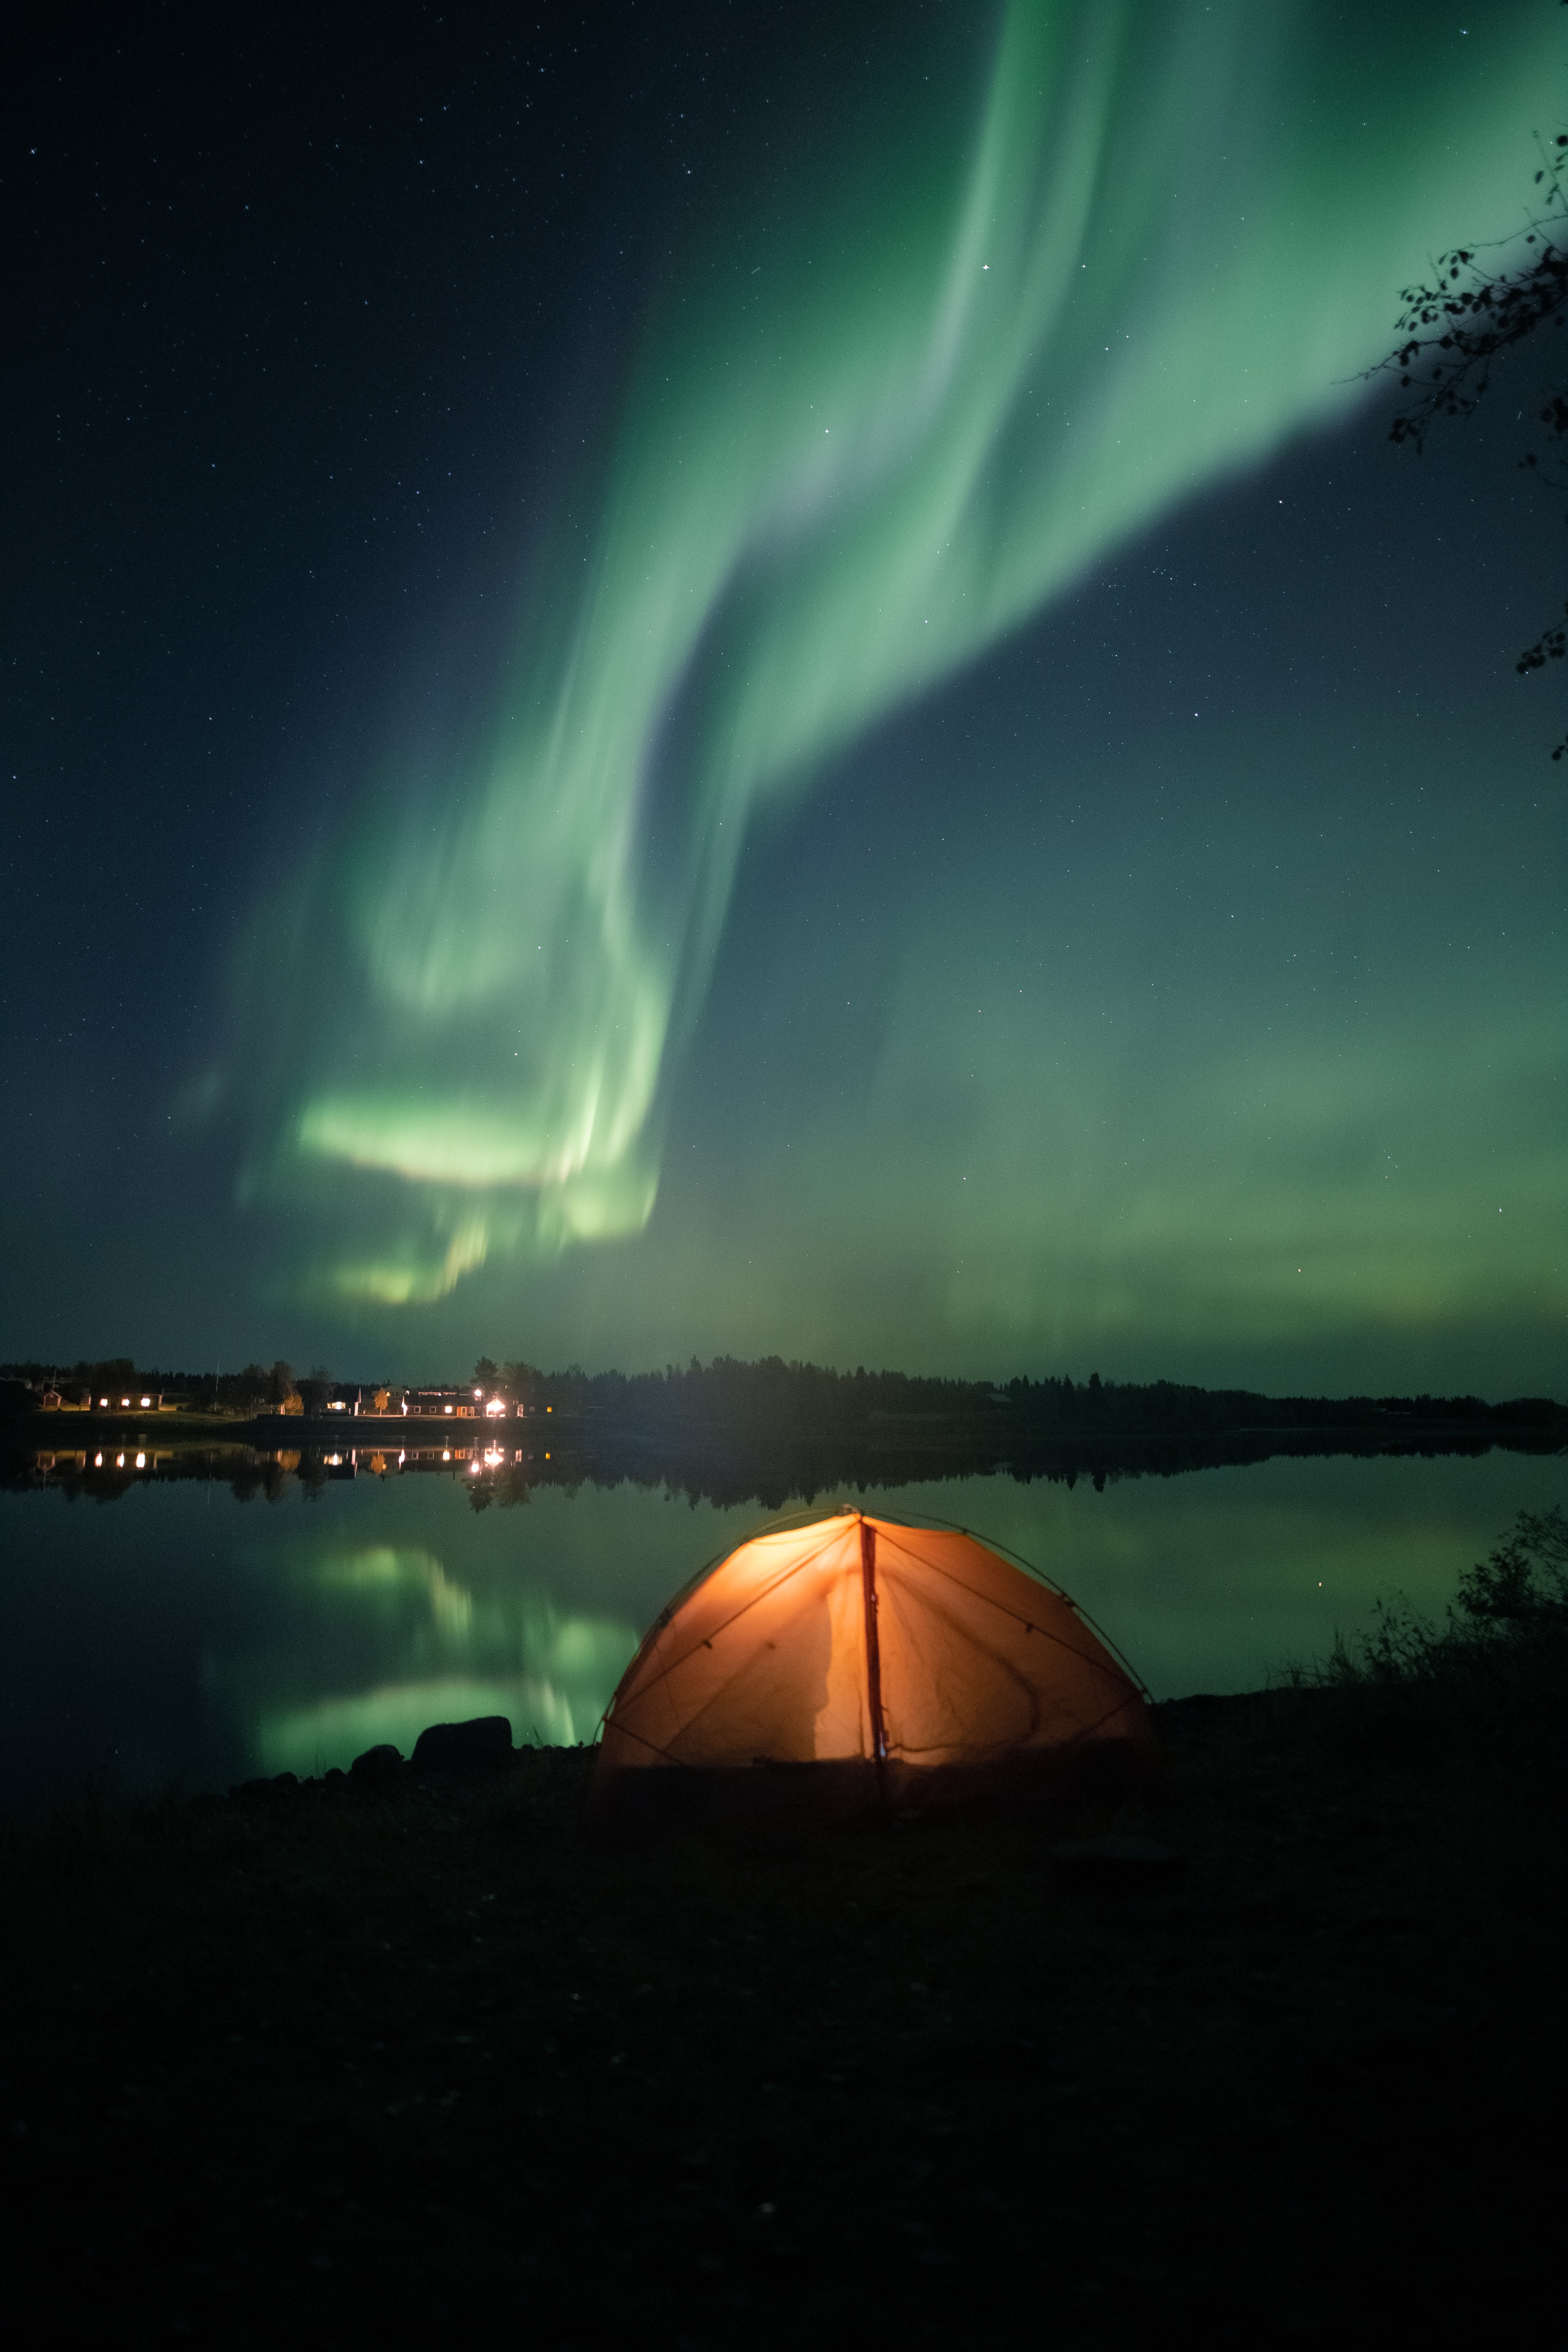 northern lights, aurora borealis, night, lake, dark, tent, camping, campsite High Definition image